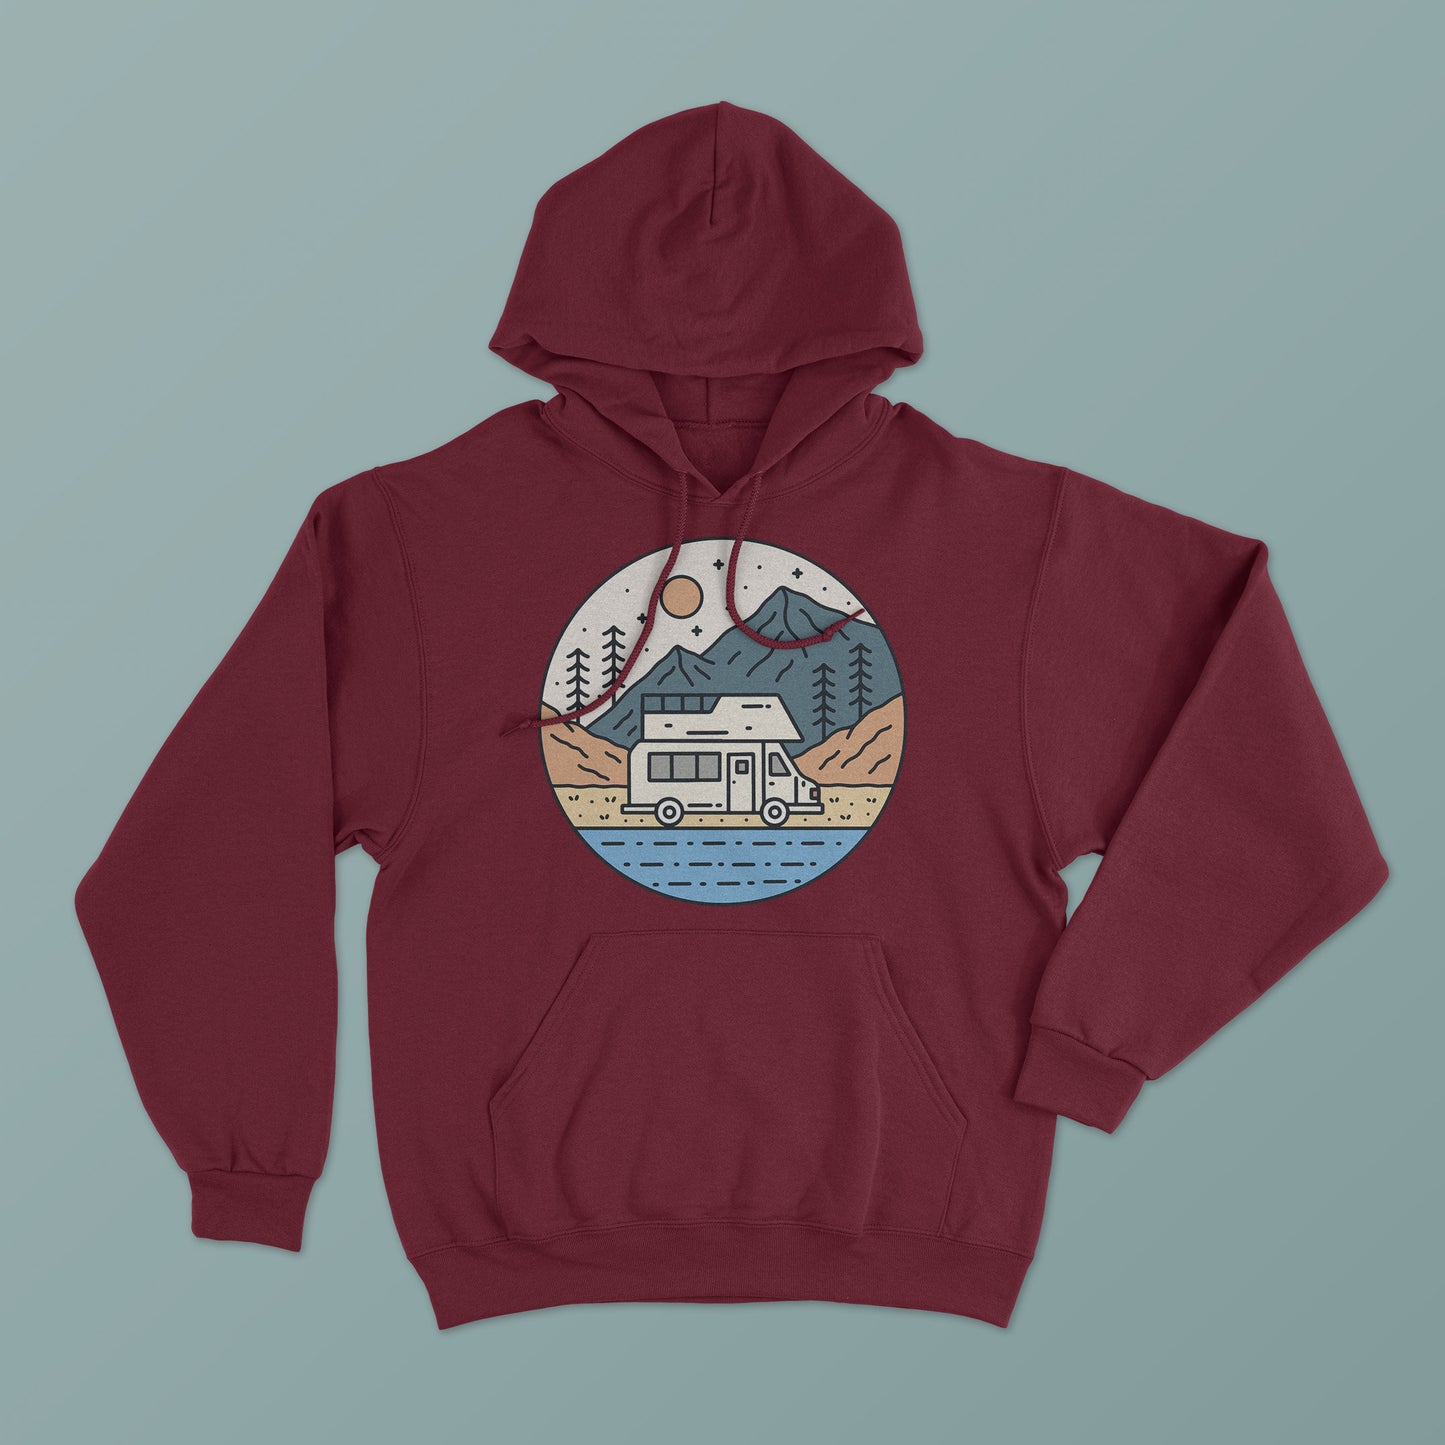 Minimalistic Camping Trailer Print Hoodie - Stylish Hoodie with Adventure Vibes, Men's, Women's Unisex Hooded Sweatshirt, Outdoor Style